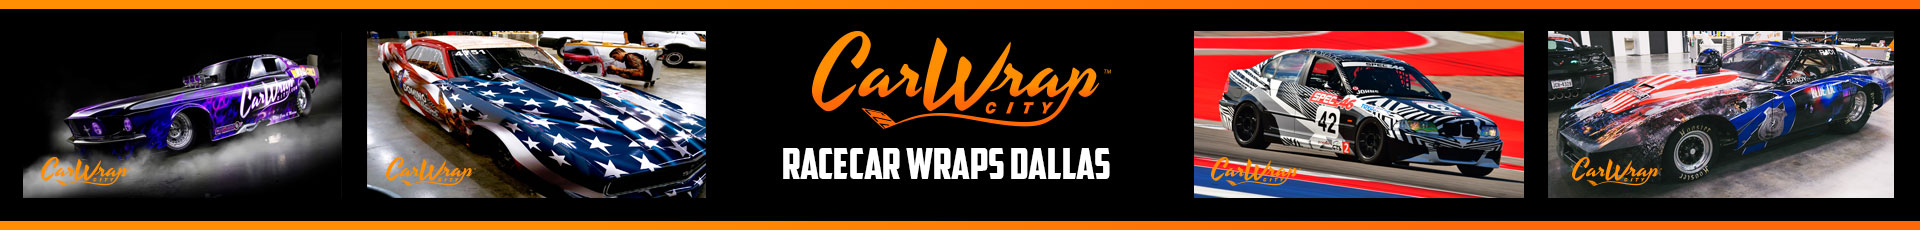 Race Car Wraps Dallas